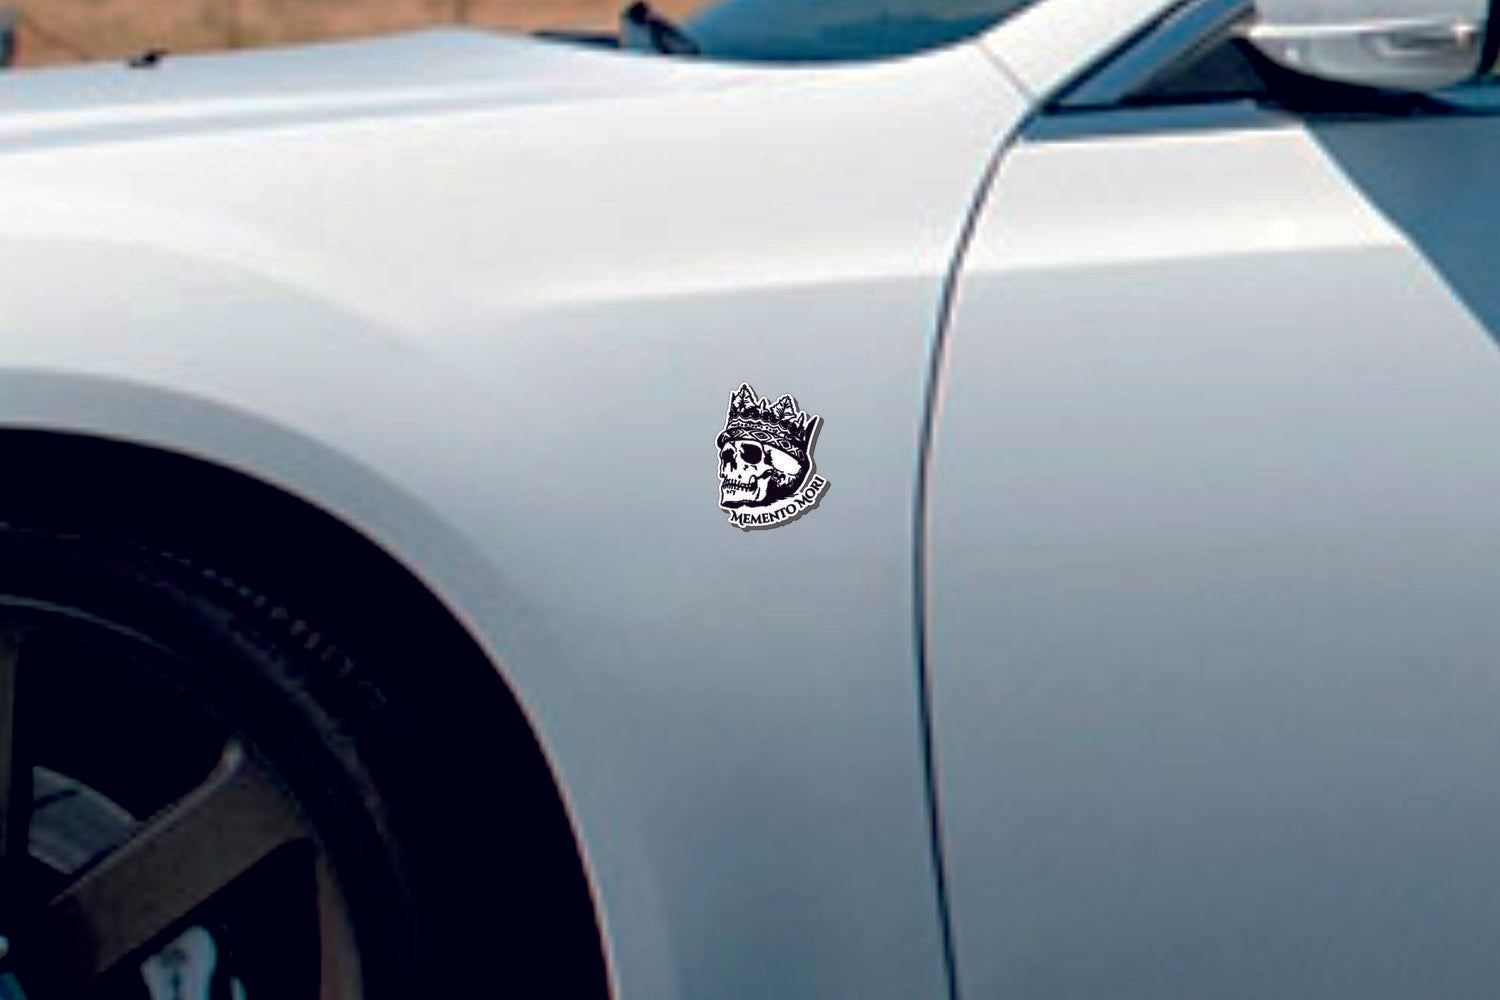 Car emblem badge for fenders with Memento Mori logo - decoinfabric